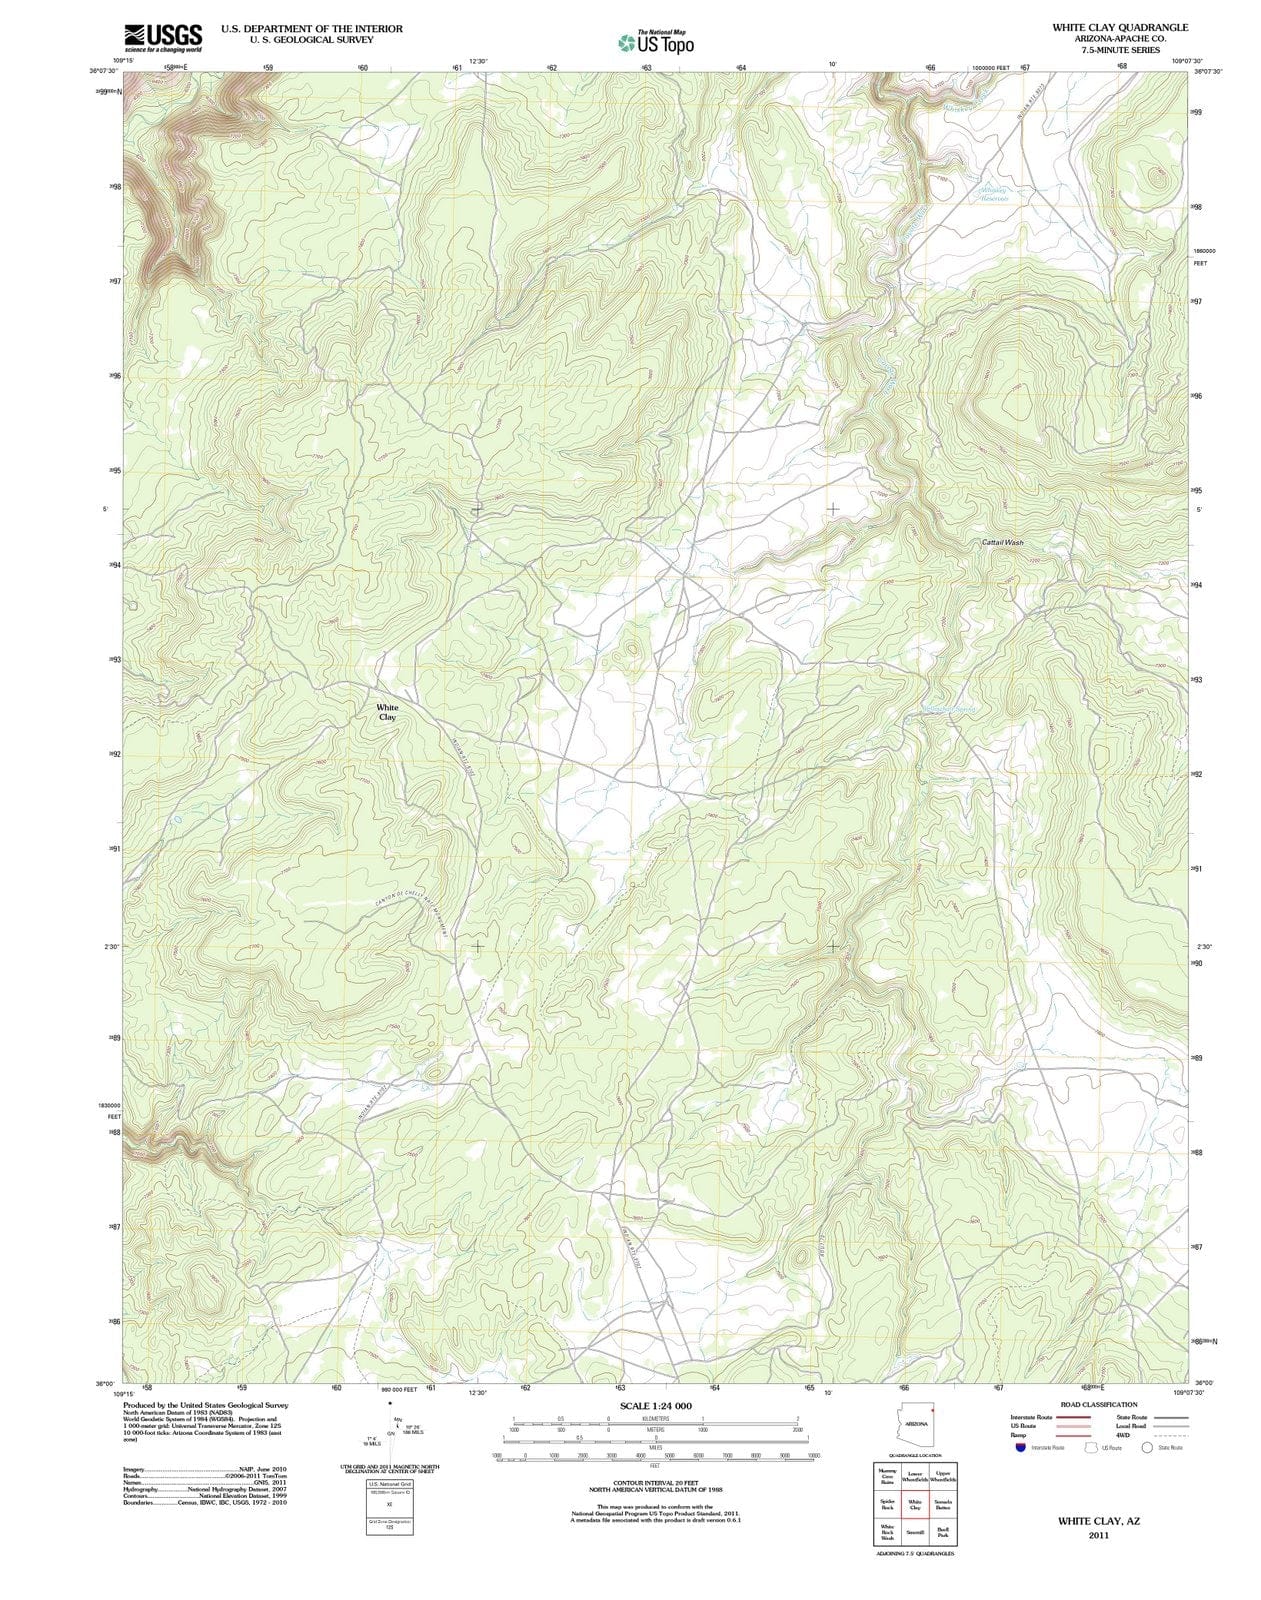 2011 White Clay, AZ - Arizona - USGS Topographic Map